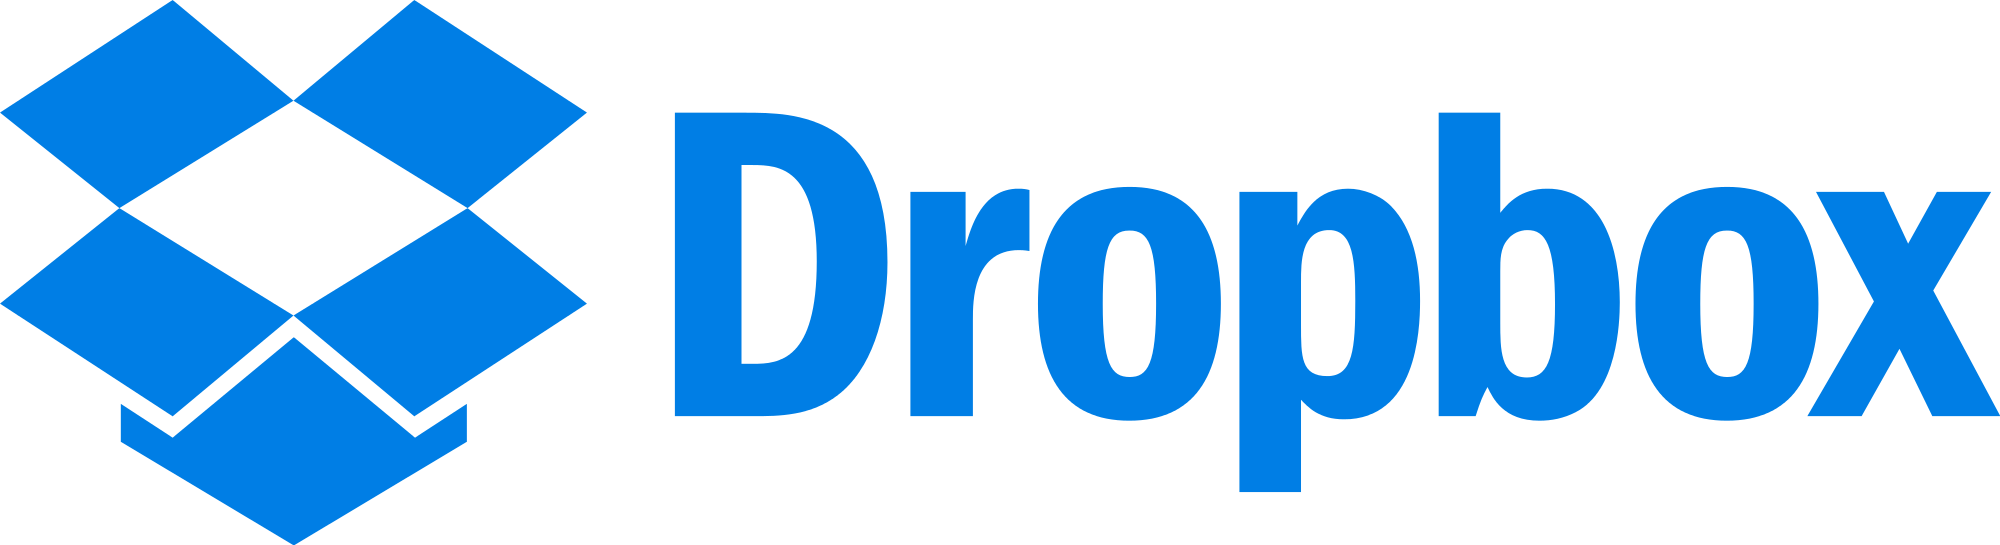 Dropbox logo (Wikimedia Commons)